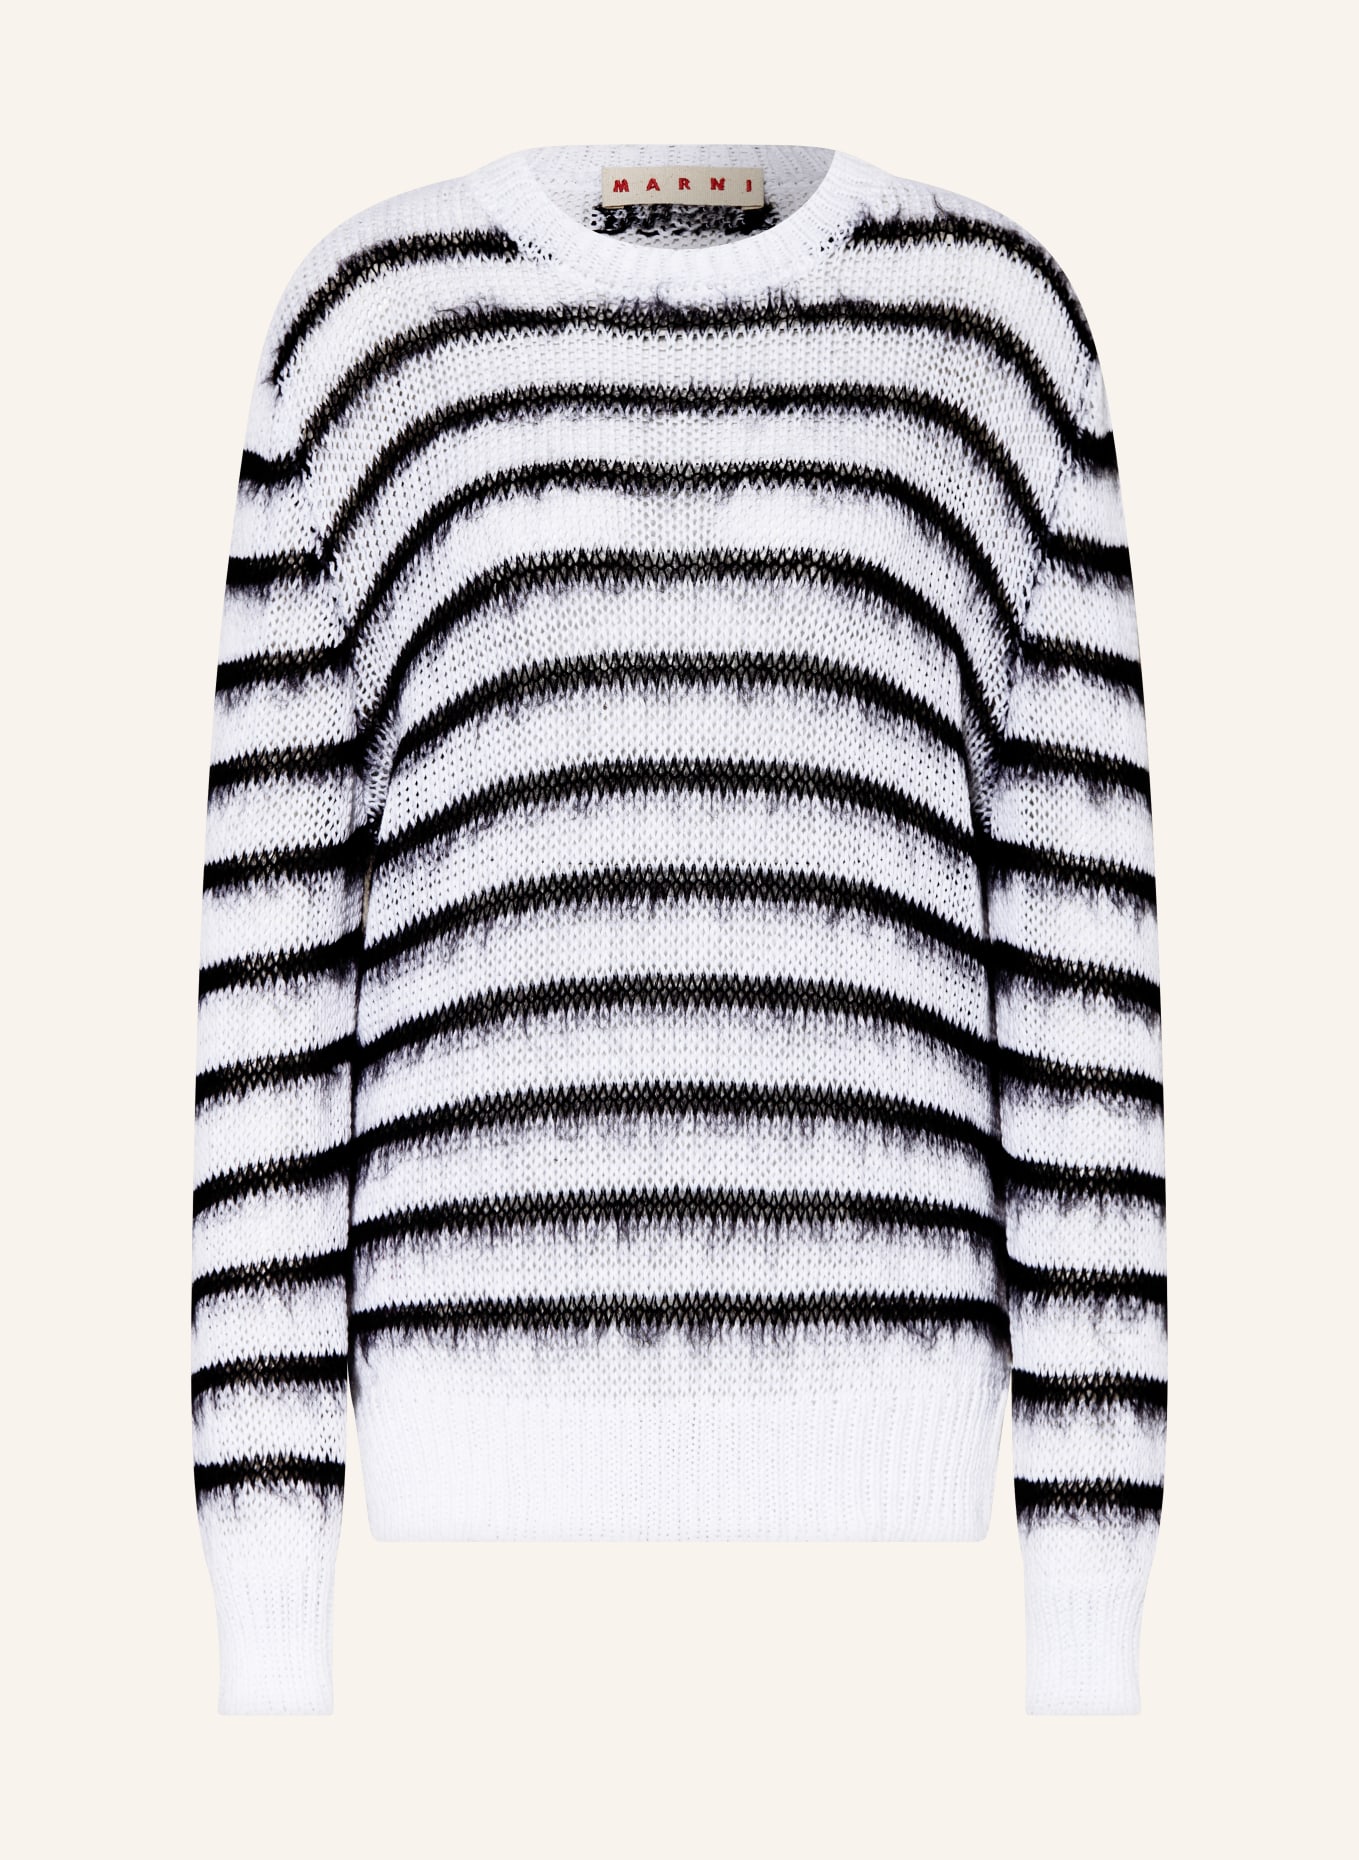 MARNI Oversized sweater, Color: BLACK/ WHITE/ GRAY (Image 1)